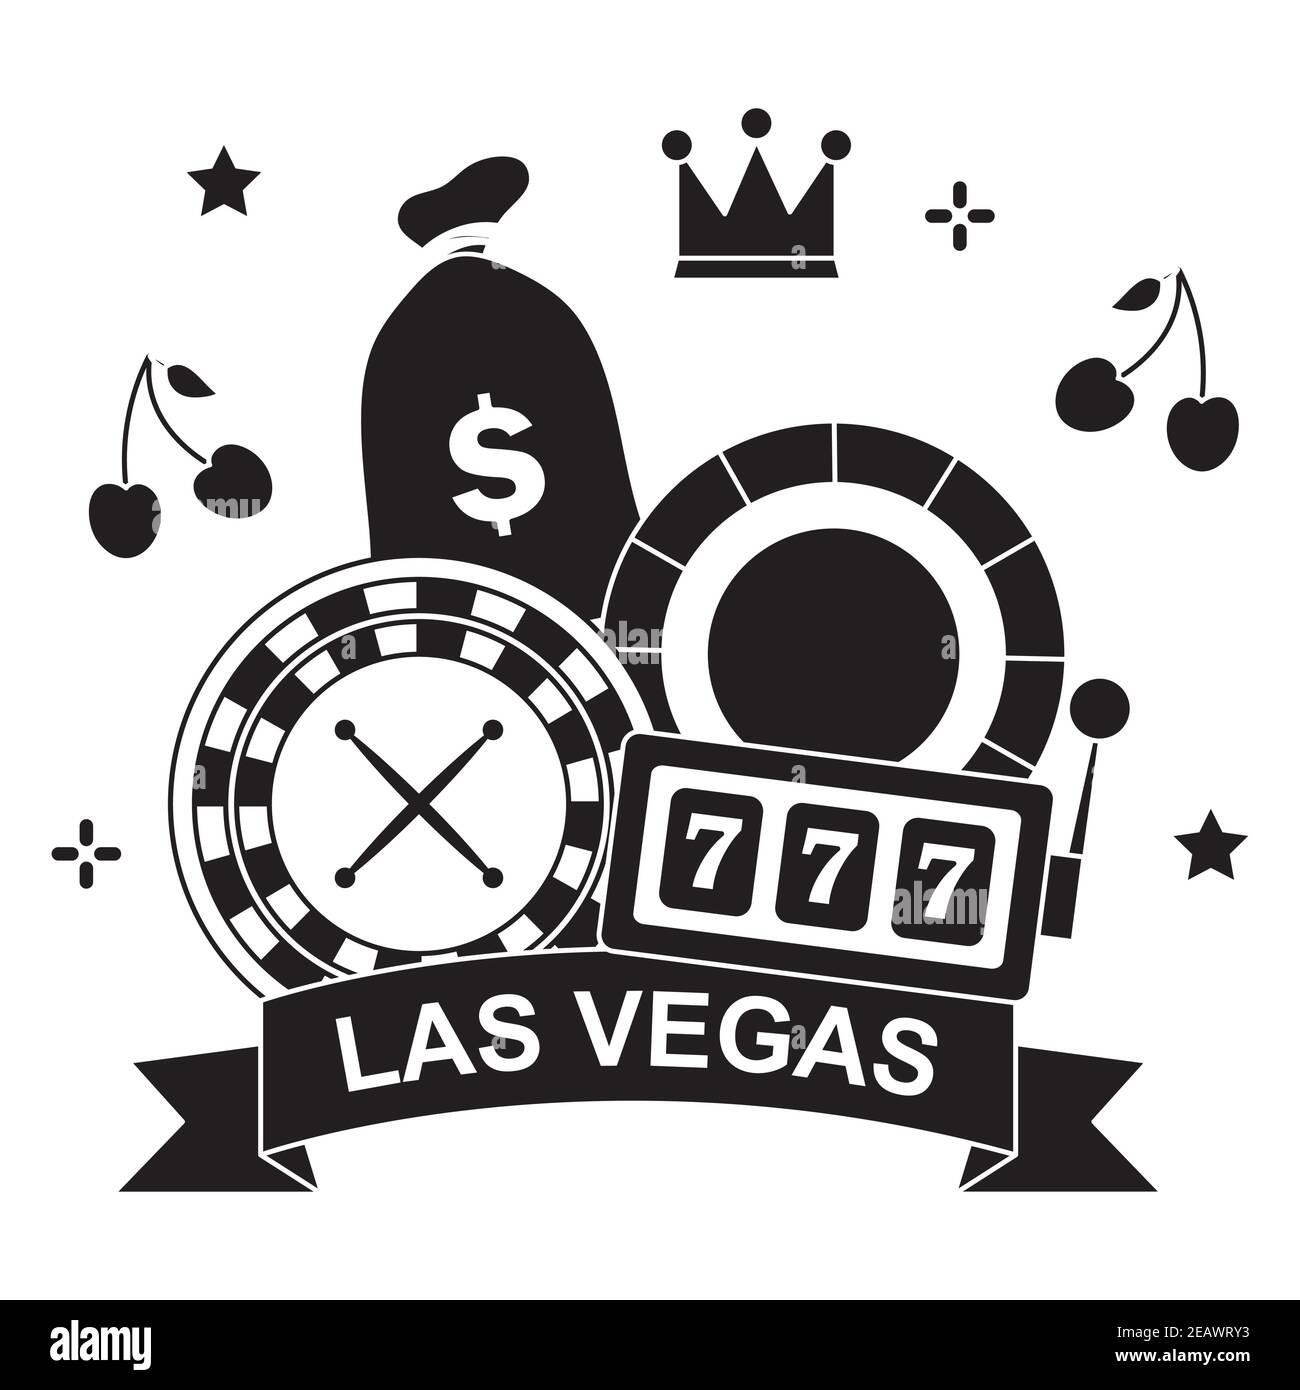 las vegas-Design mit Casino-Symbole auf weißem Hintergrund, Silhouette  Stil, Vektor-Illustration Stock-Vektorgrafik - Alamy